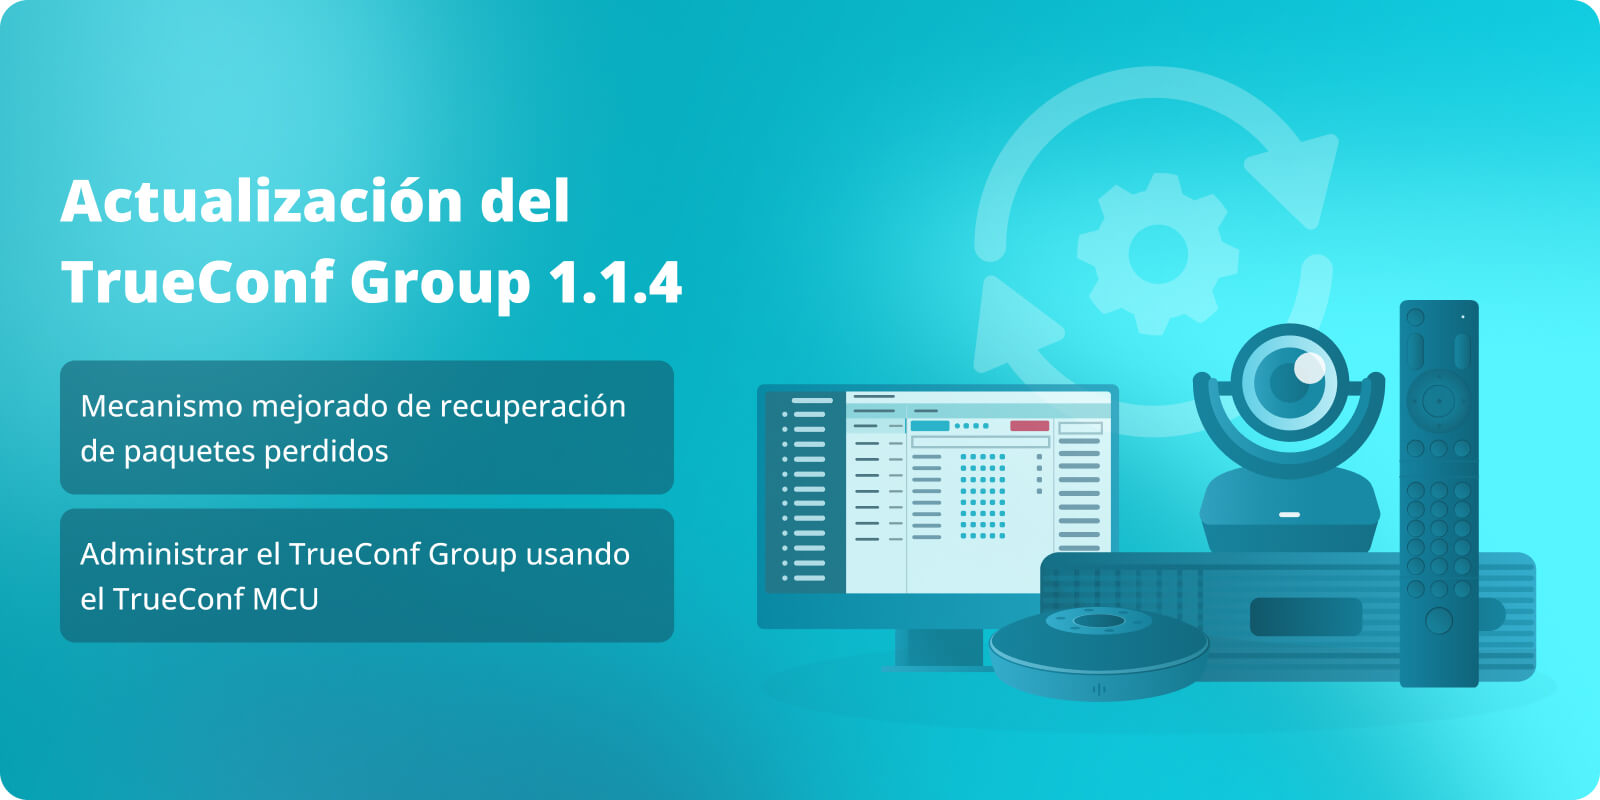 TrueConf Group 1.1.4: mecanismo de recuperación mejorado para paquetes perdidos e integración con TrueConf MCU 1